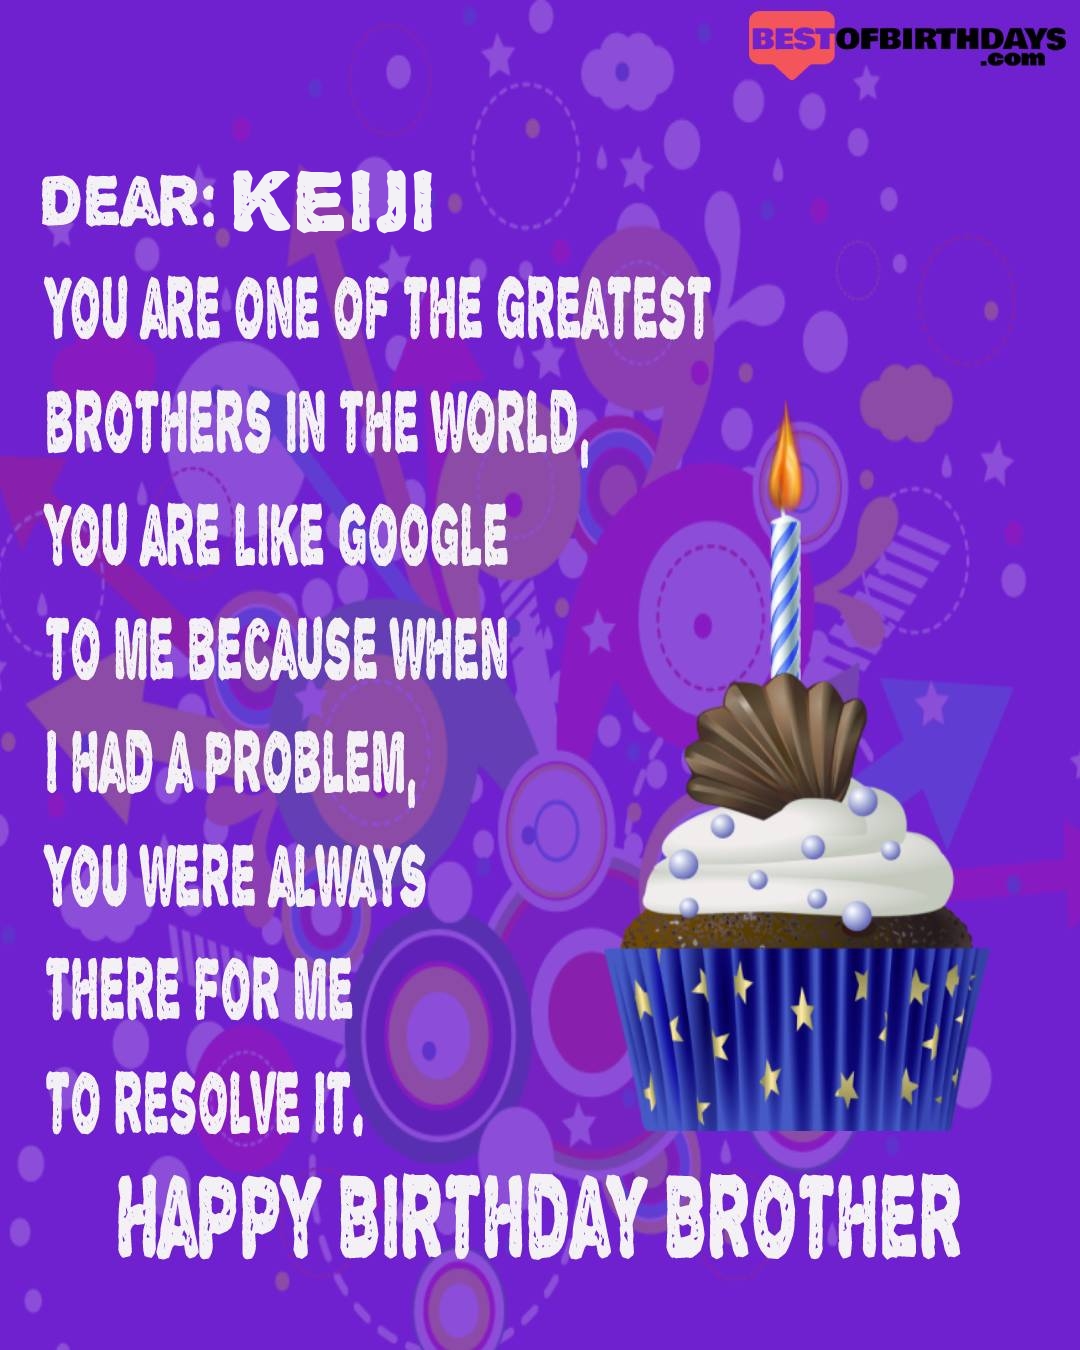 Happy birthday keiji bhai brother bro